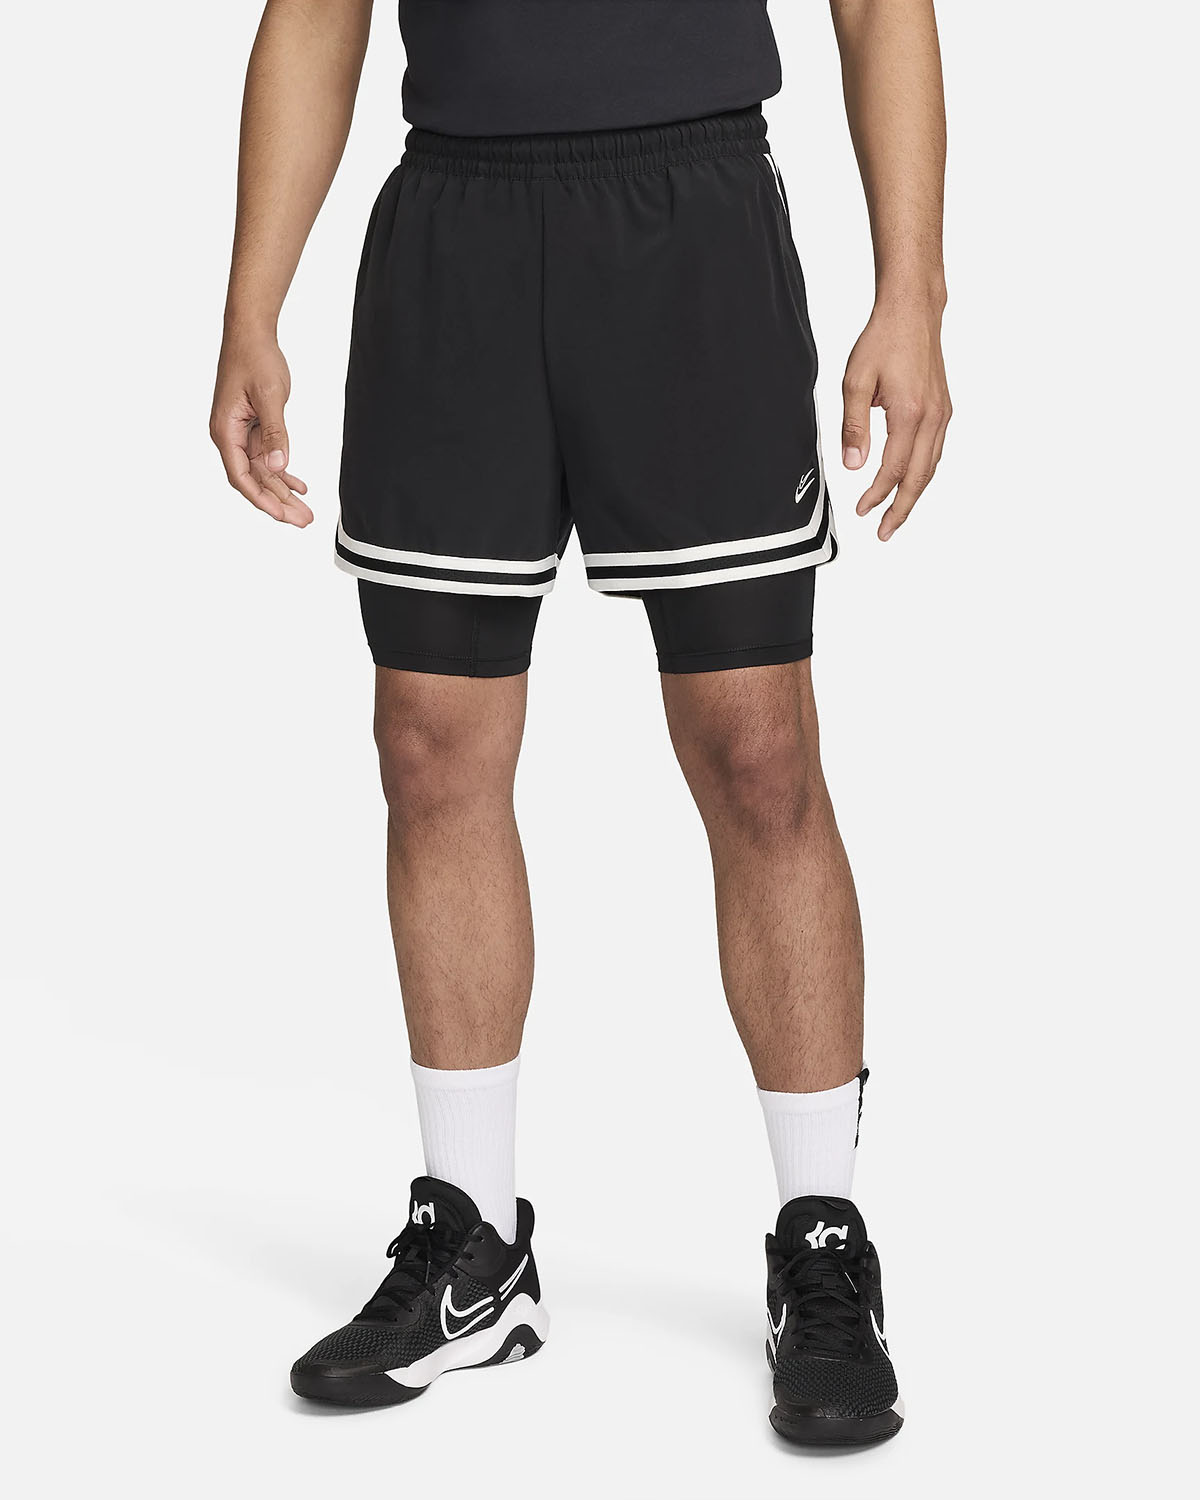 Nike KD 17 2 in 1 Basketball Shorts Black